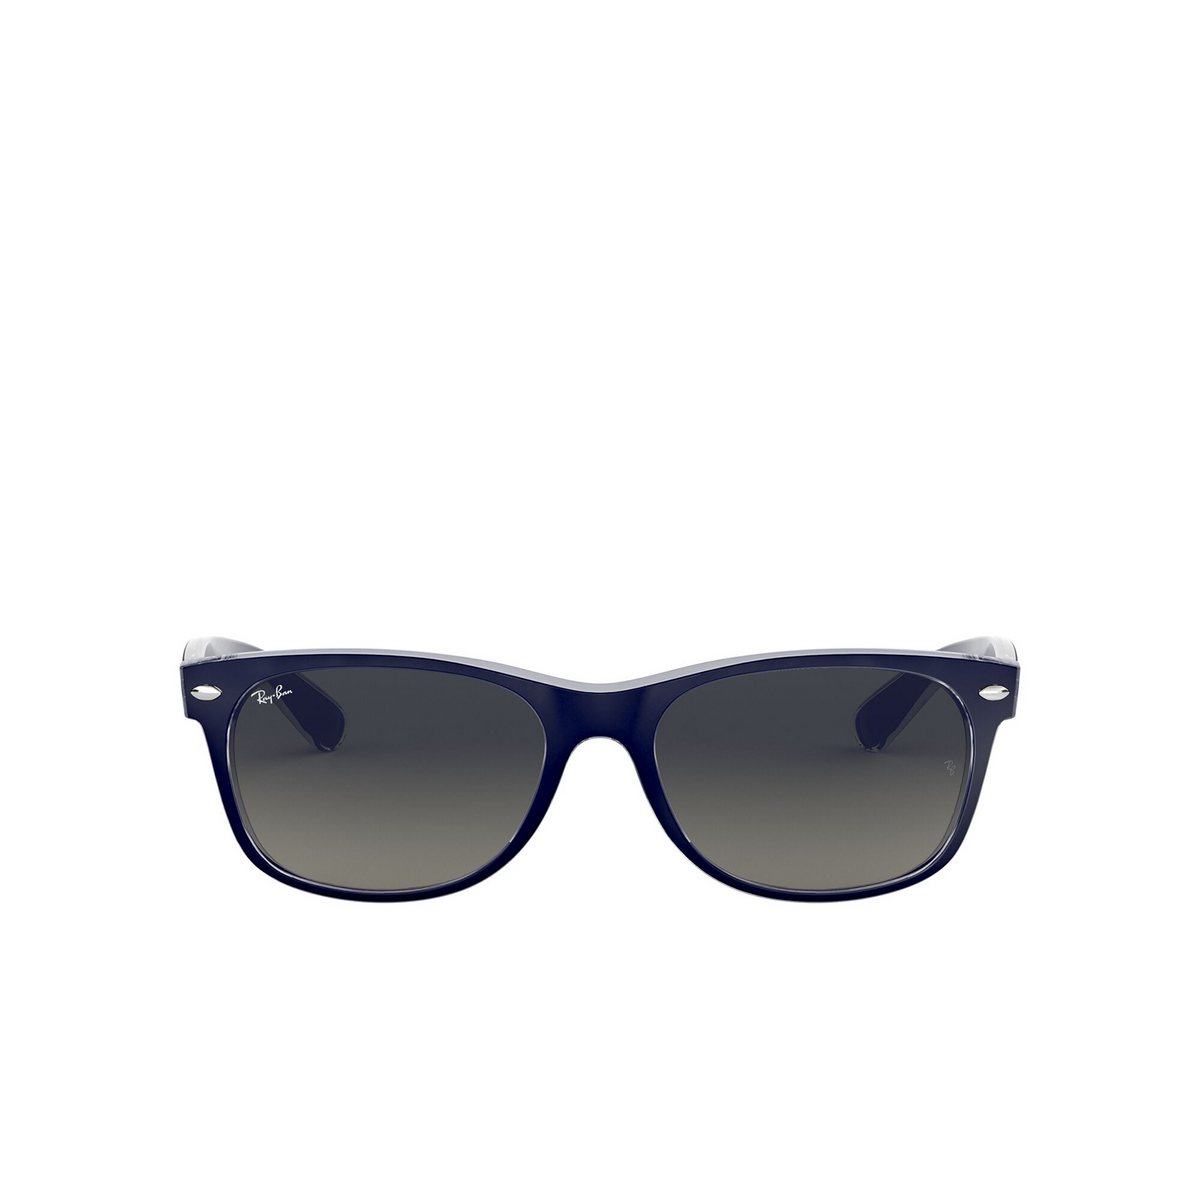 Ray-Ban NEW WAYFARER Sunglasses 605371 Matte Blue on Transparent - front view